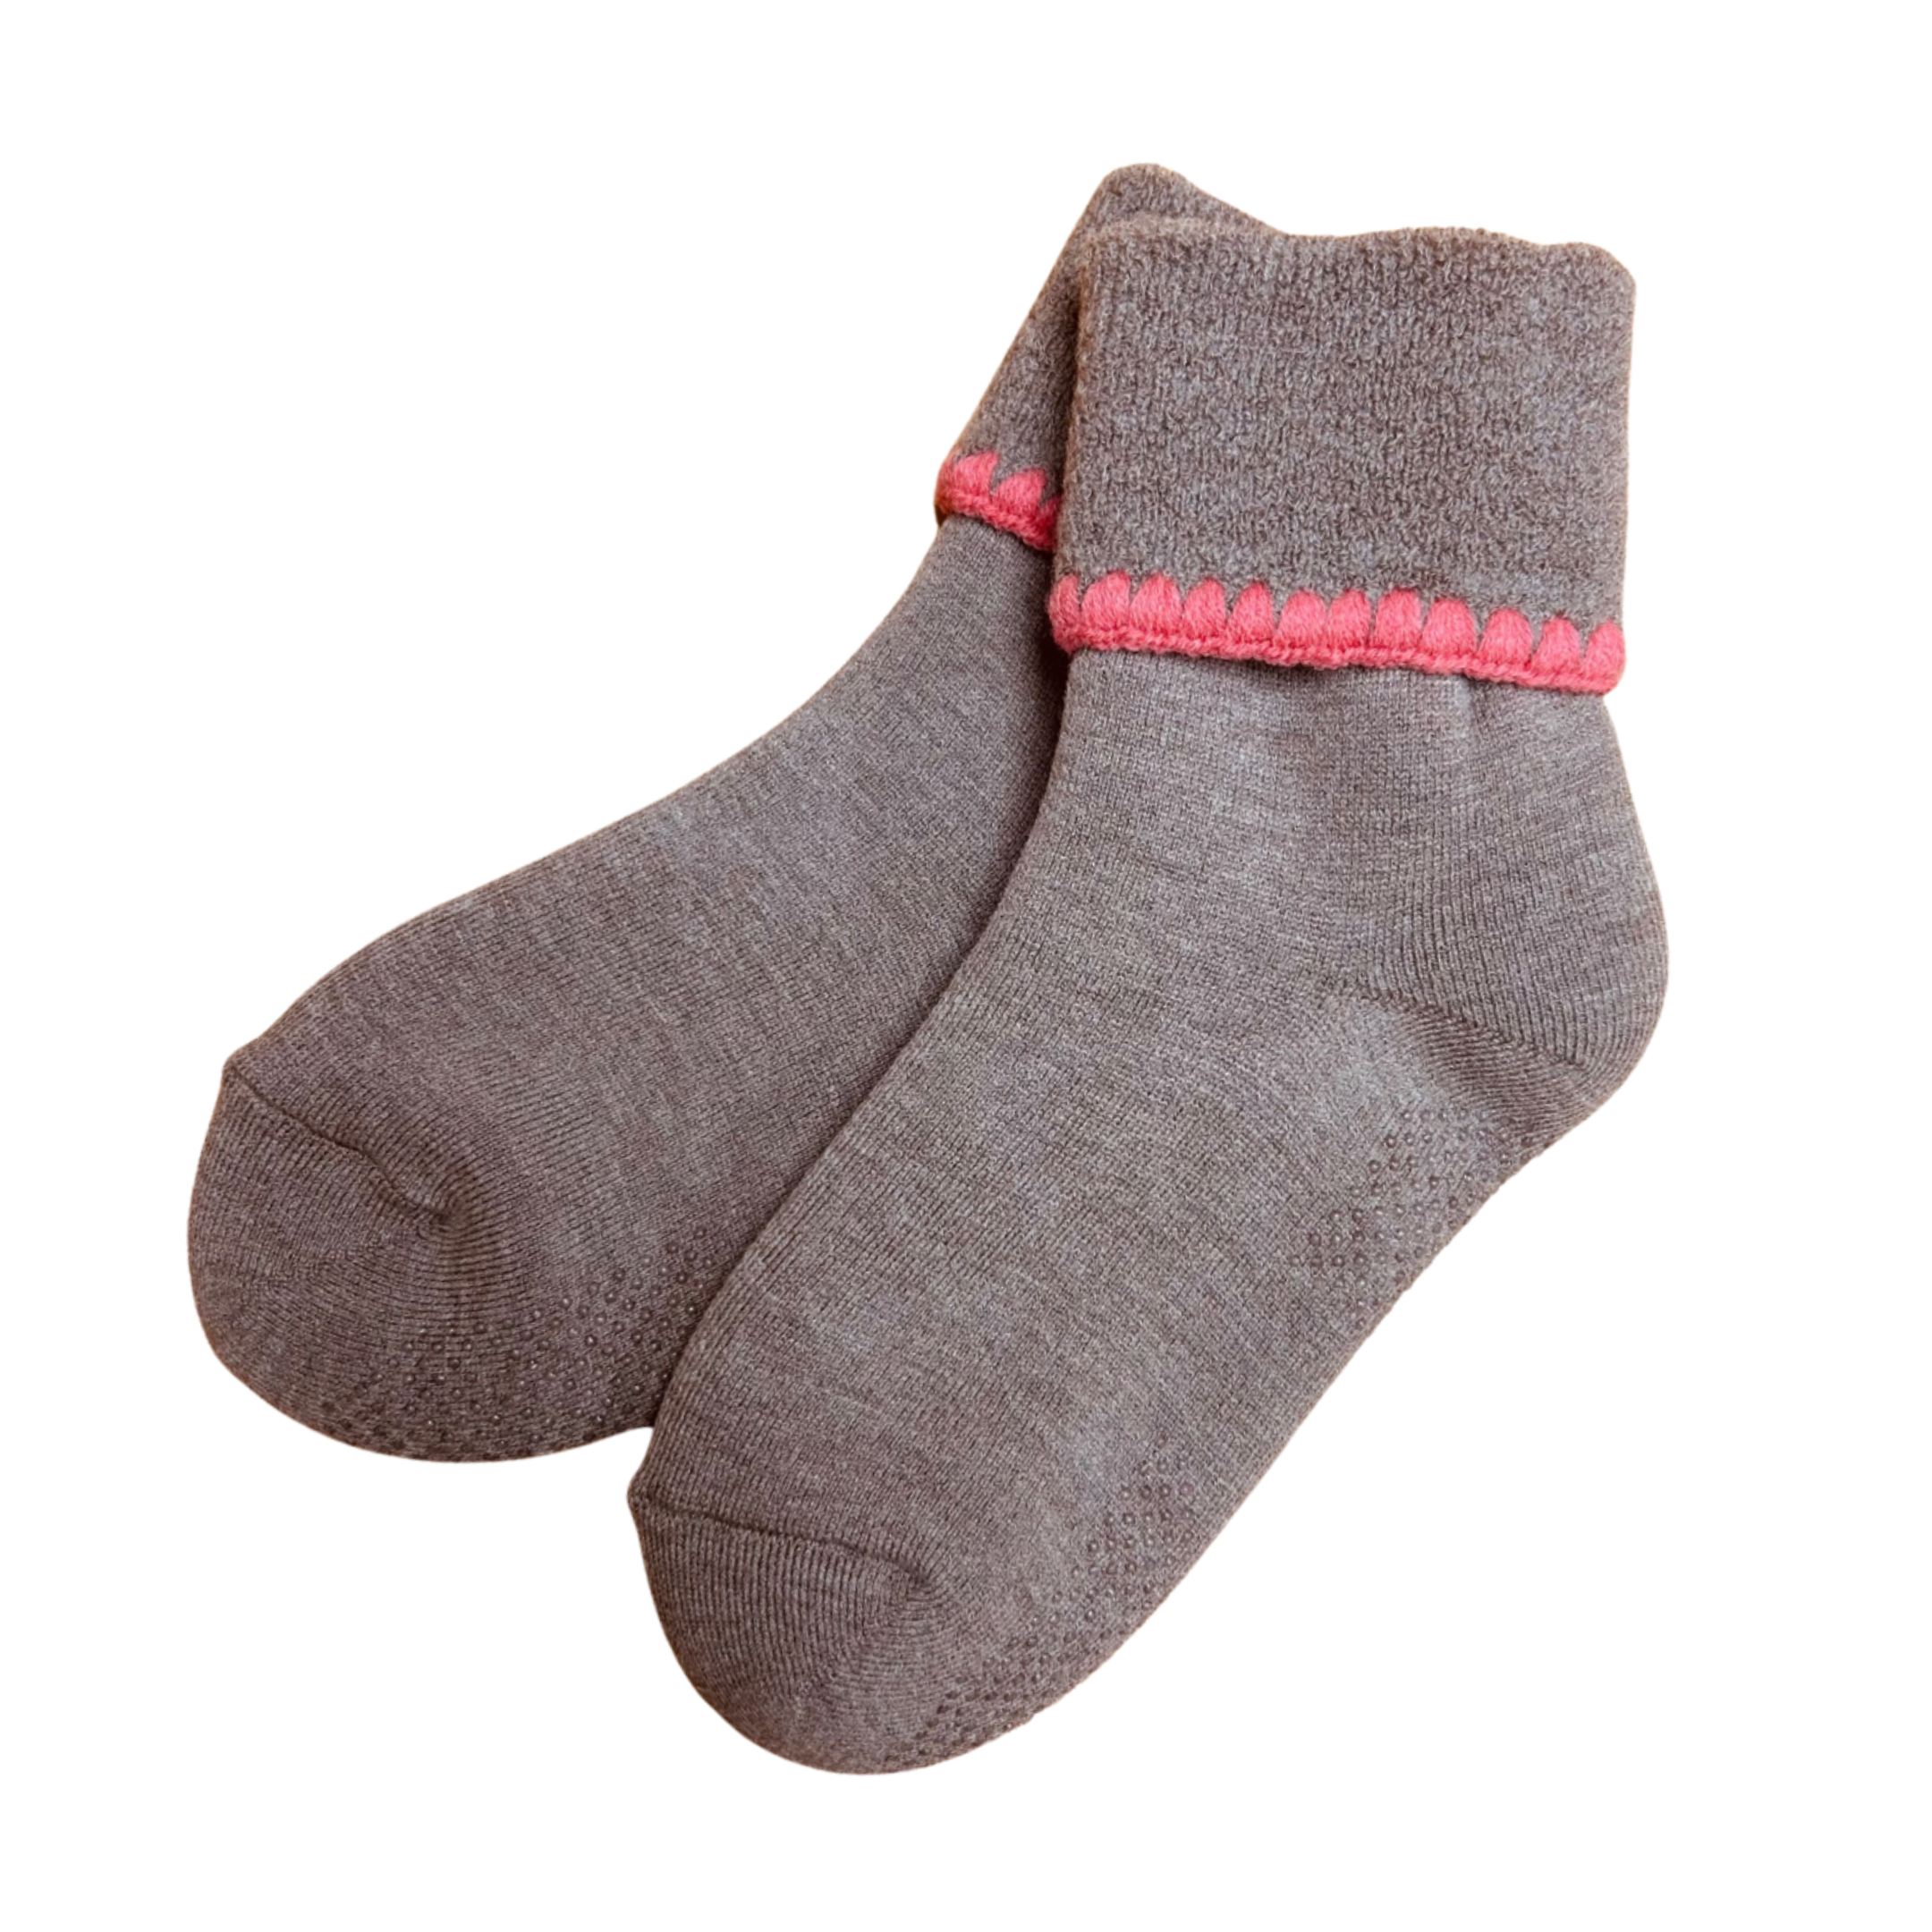 Slipper Cuff Socks With Grips - CHERRYSTONEstyle